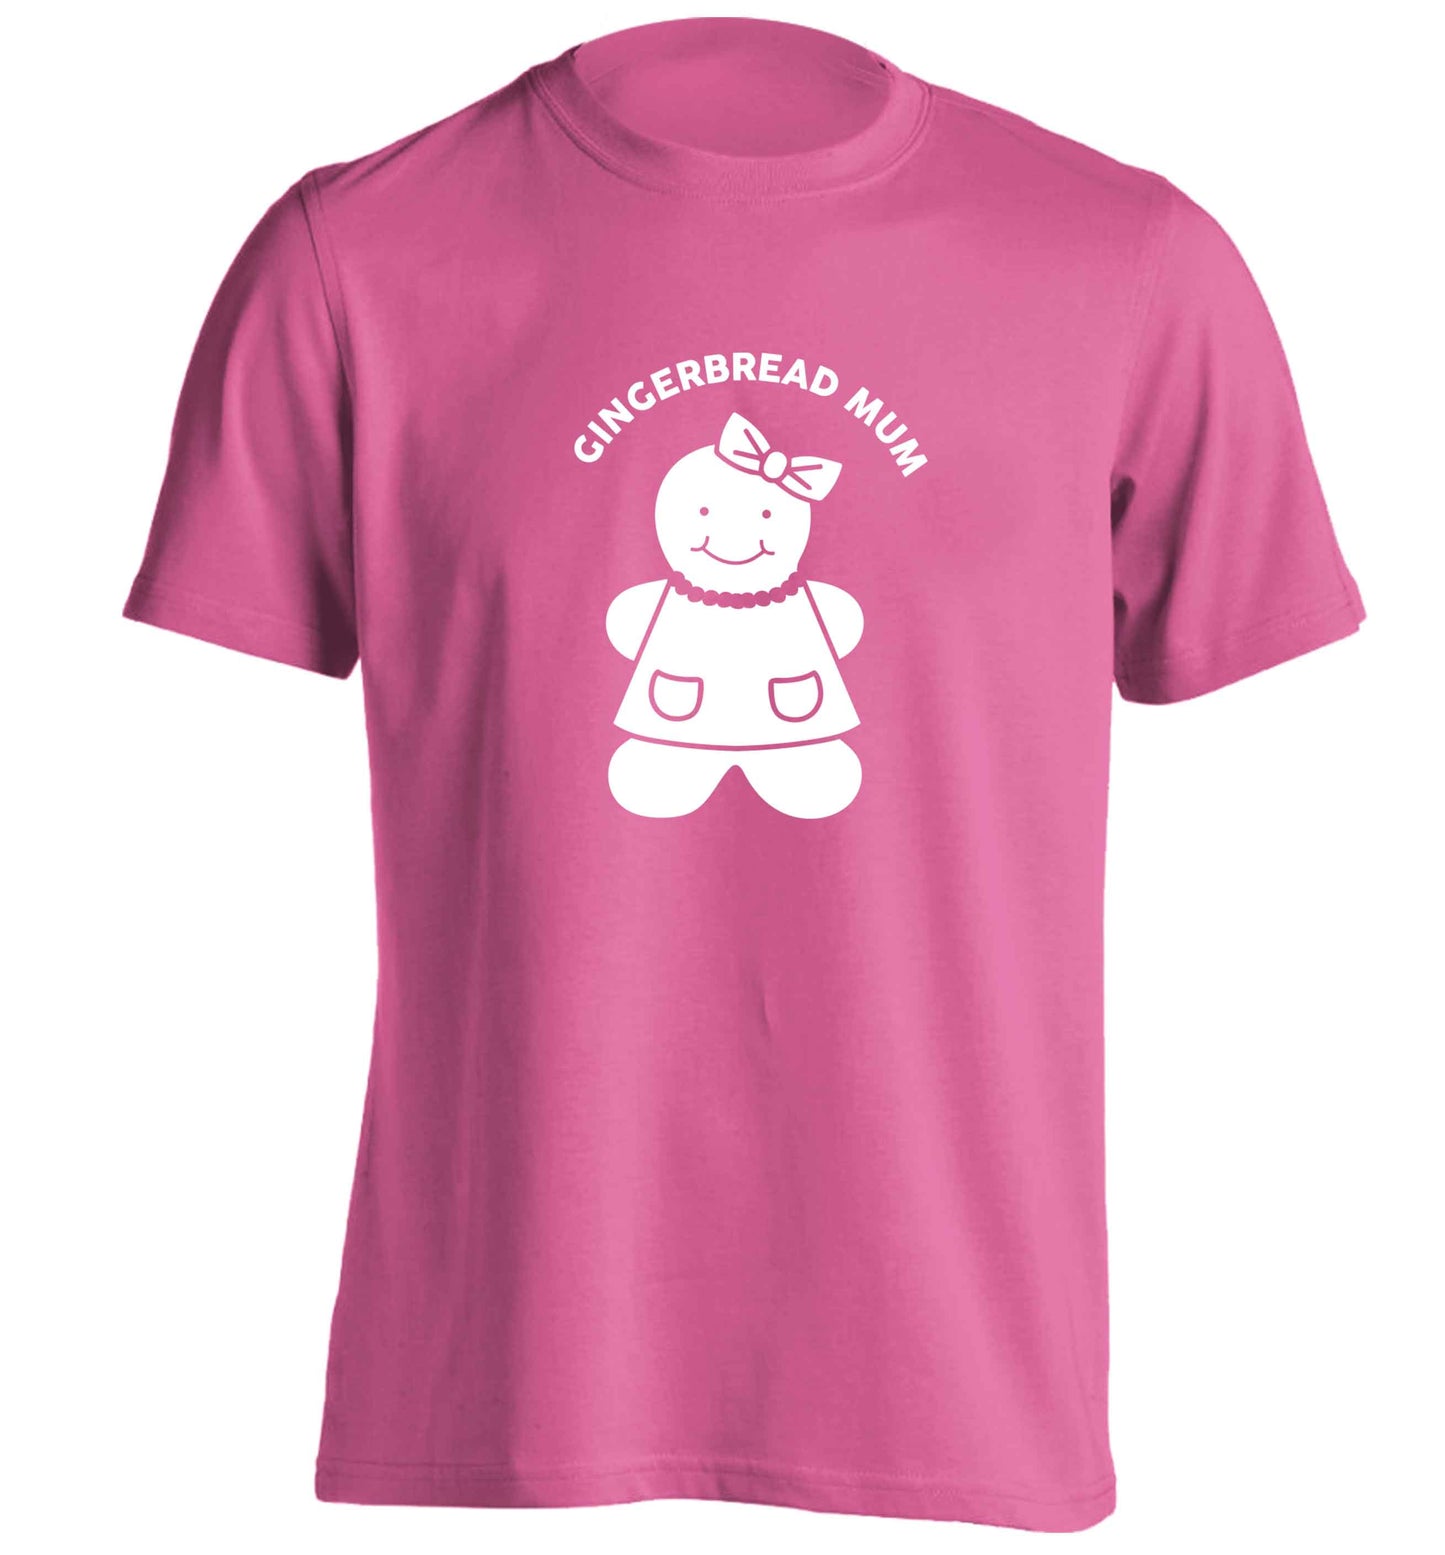 Merry Christmas adults unisex pink Tshirt 2XL